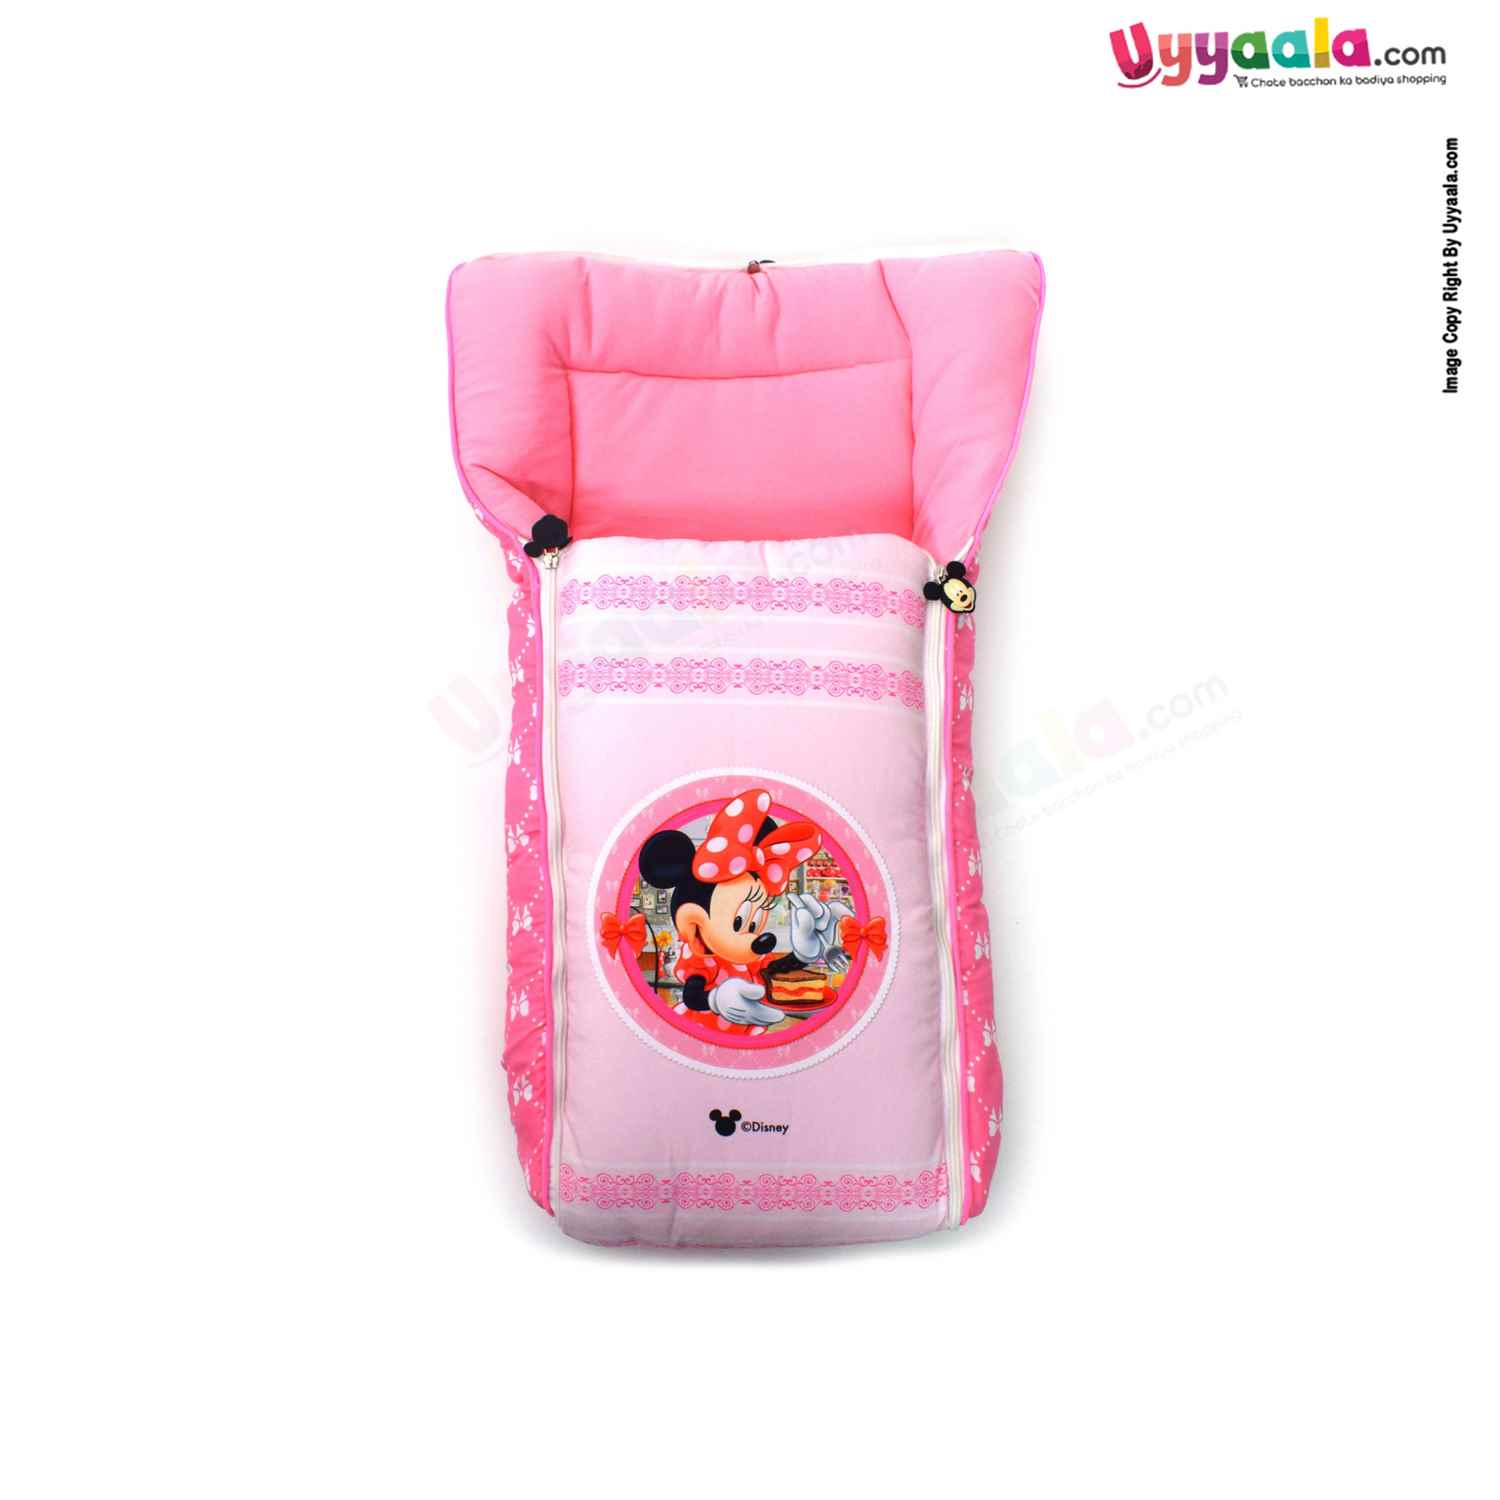 DISNEY Baby Carry Nest (Sleeping Bag) Cotton Disney Print 0+m Age, Pink